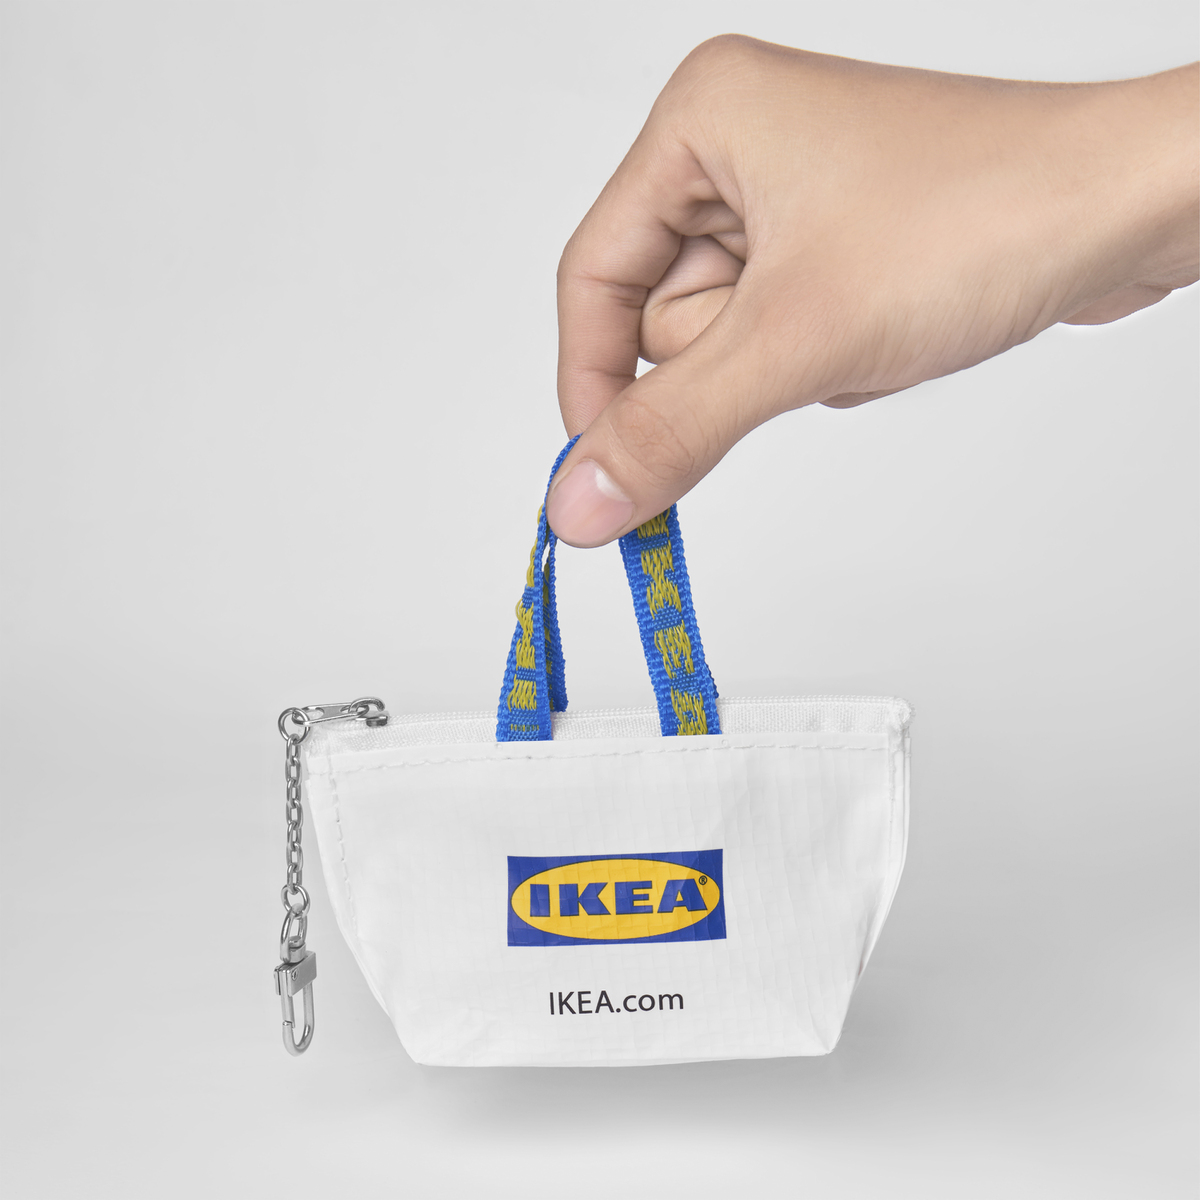 IKEAポップアップストア